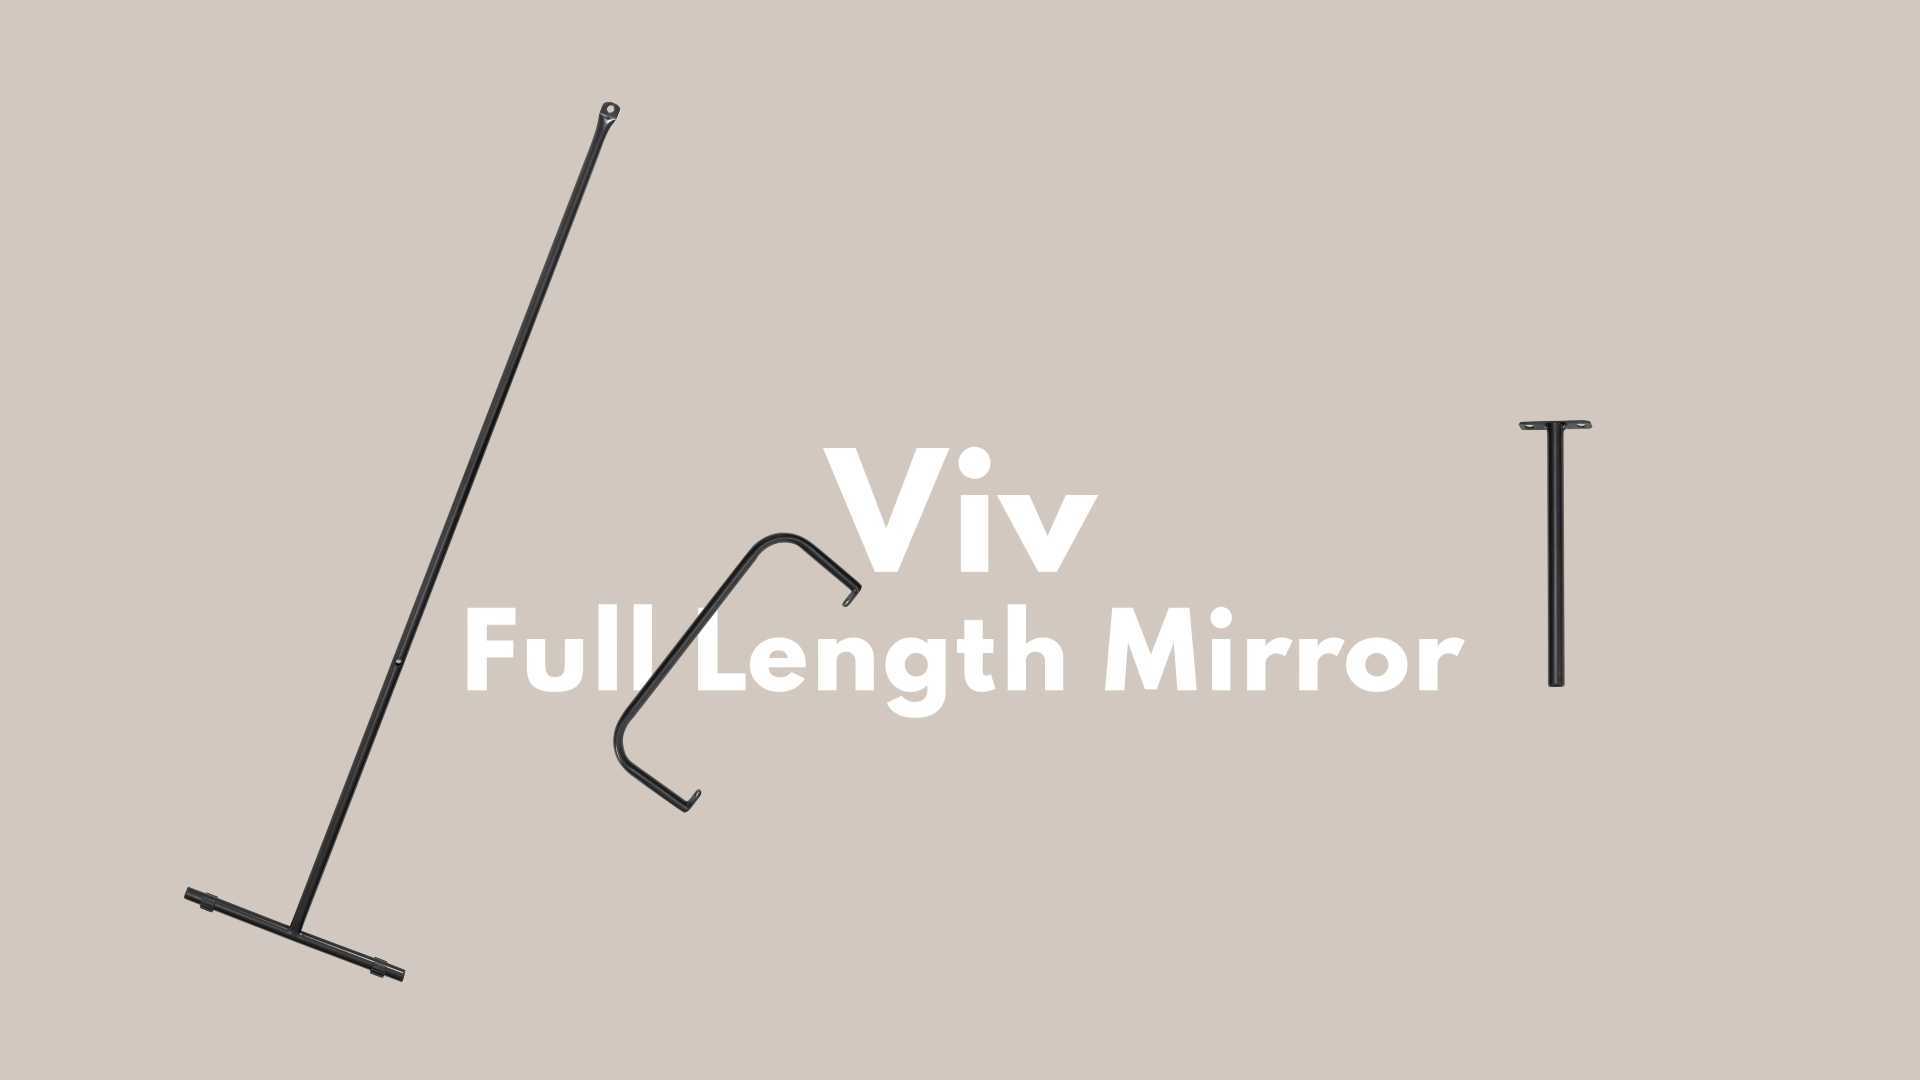 Harmati Mirror 镜子 Amazon 亚马逊 短视频广告